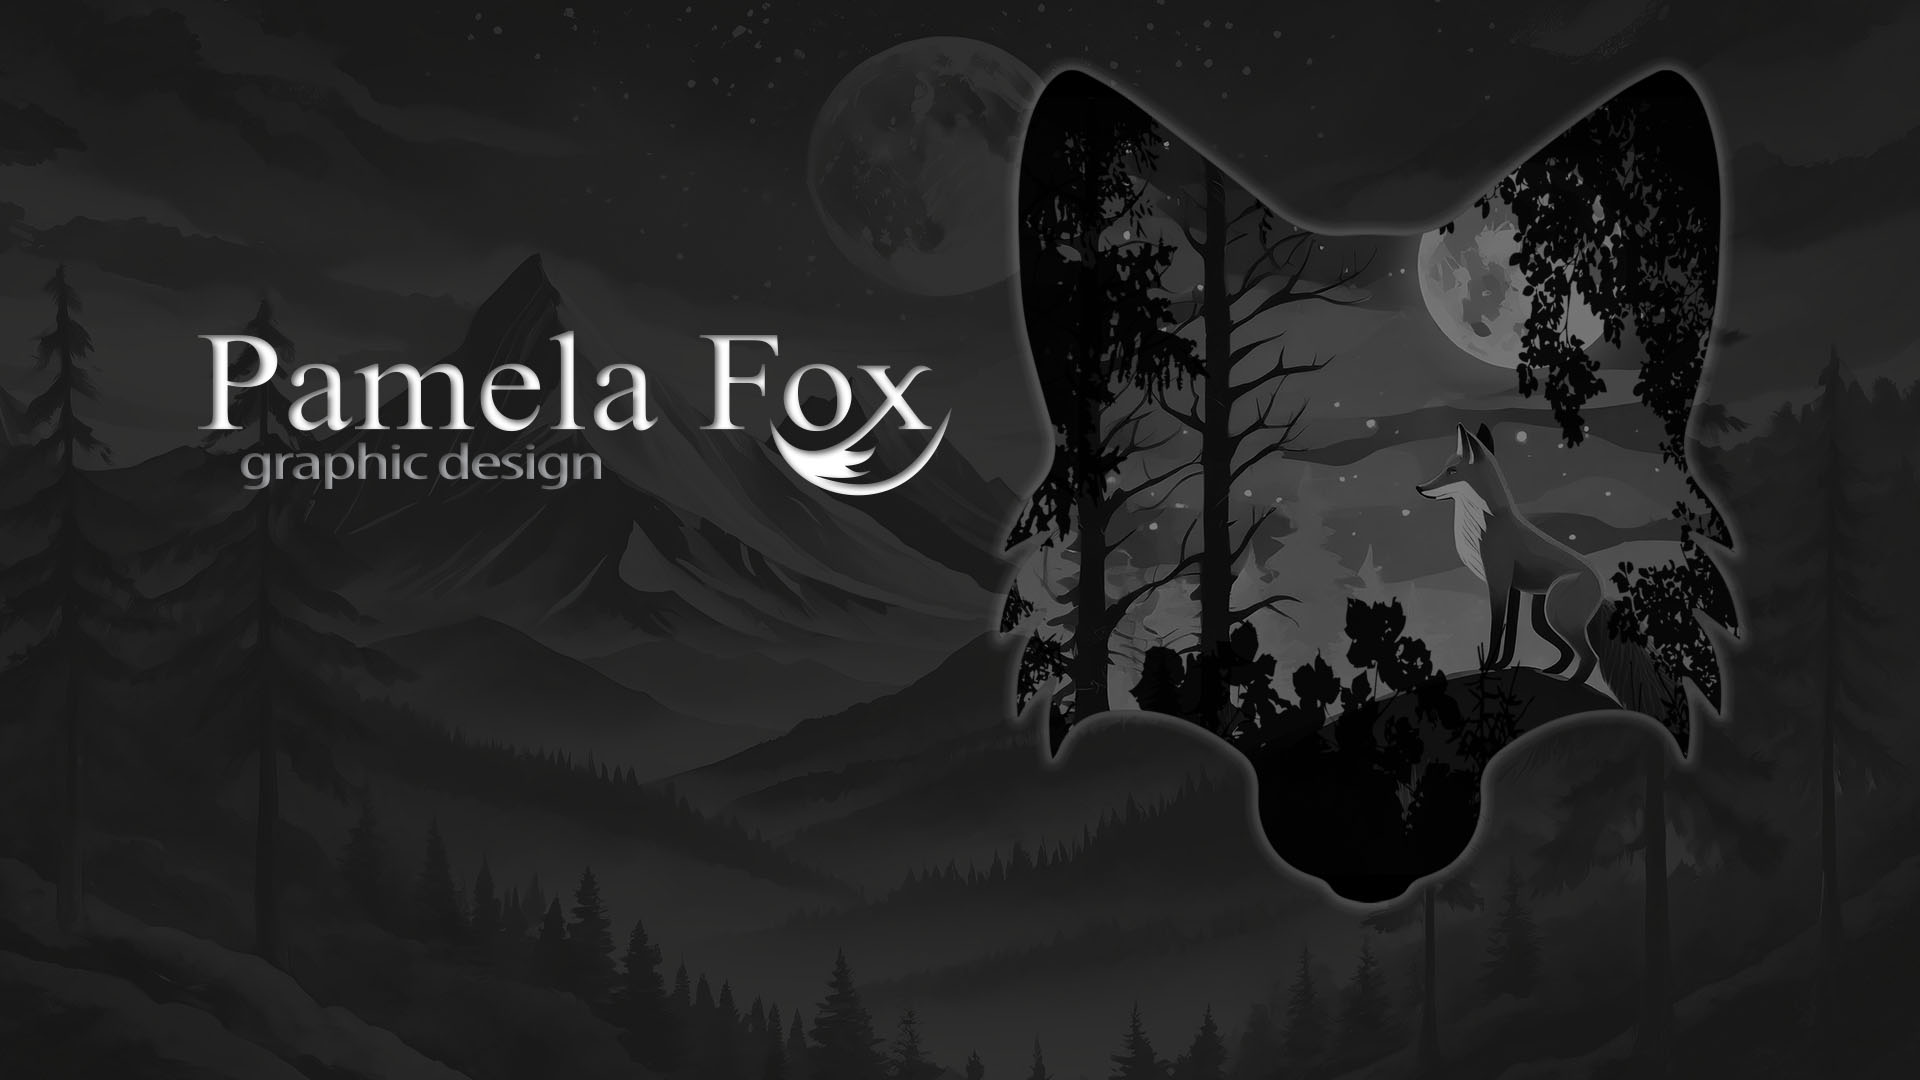 Pamela Fox Graphic Design background